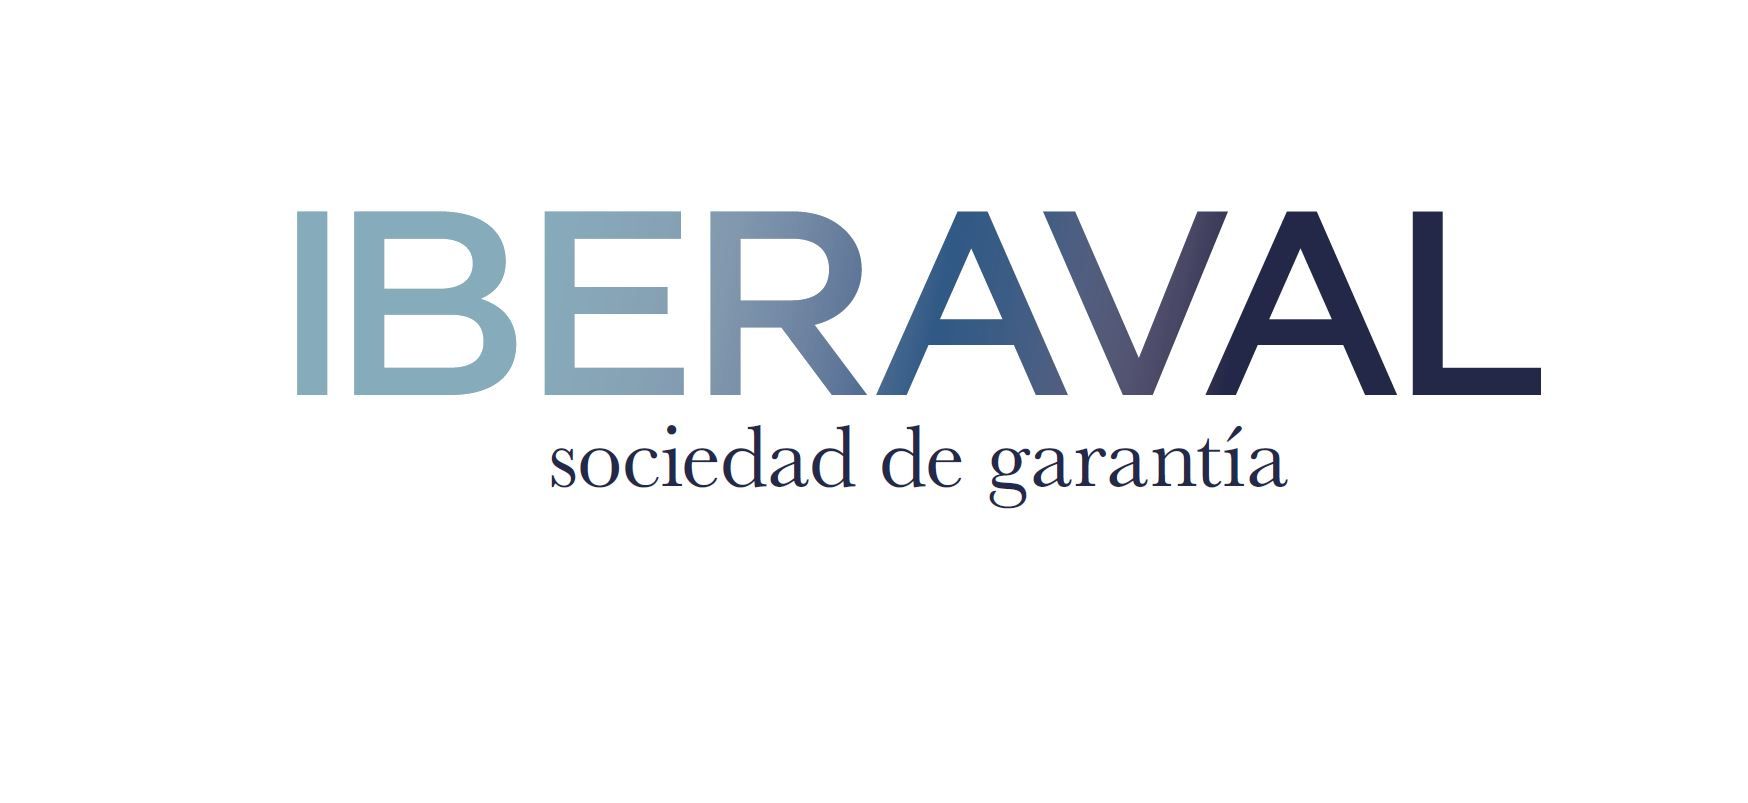 Nuevo logotipo de Iberaval